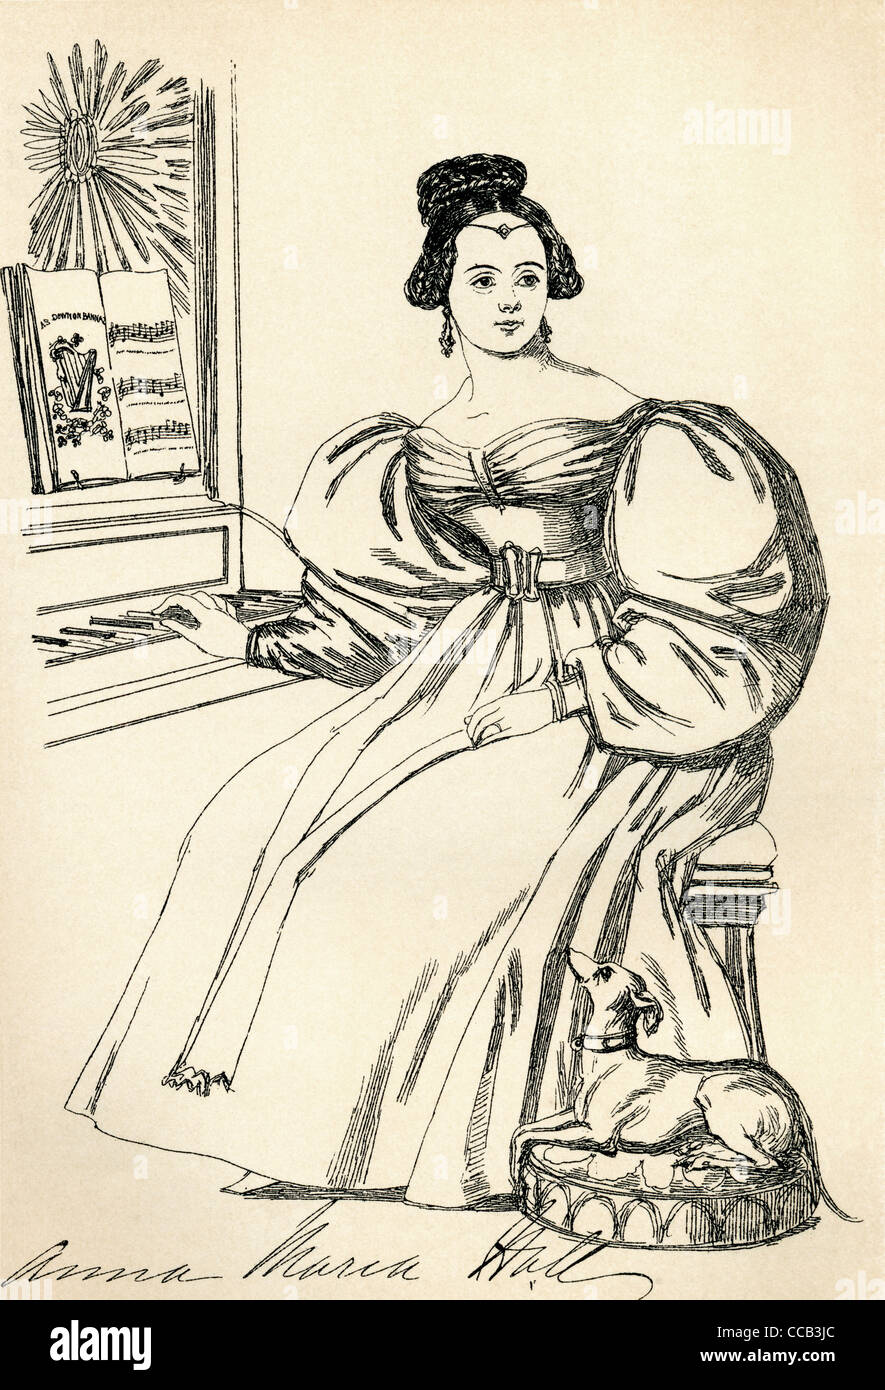 Anna Maria Hall, aka Mrs. S.C. Hall, 1800 – 1881. Irish novelist. From The Maclise Portrait Gallery, published 1898. Stock Photo